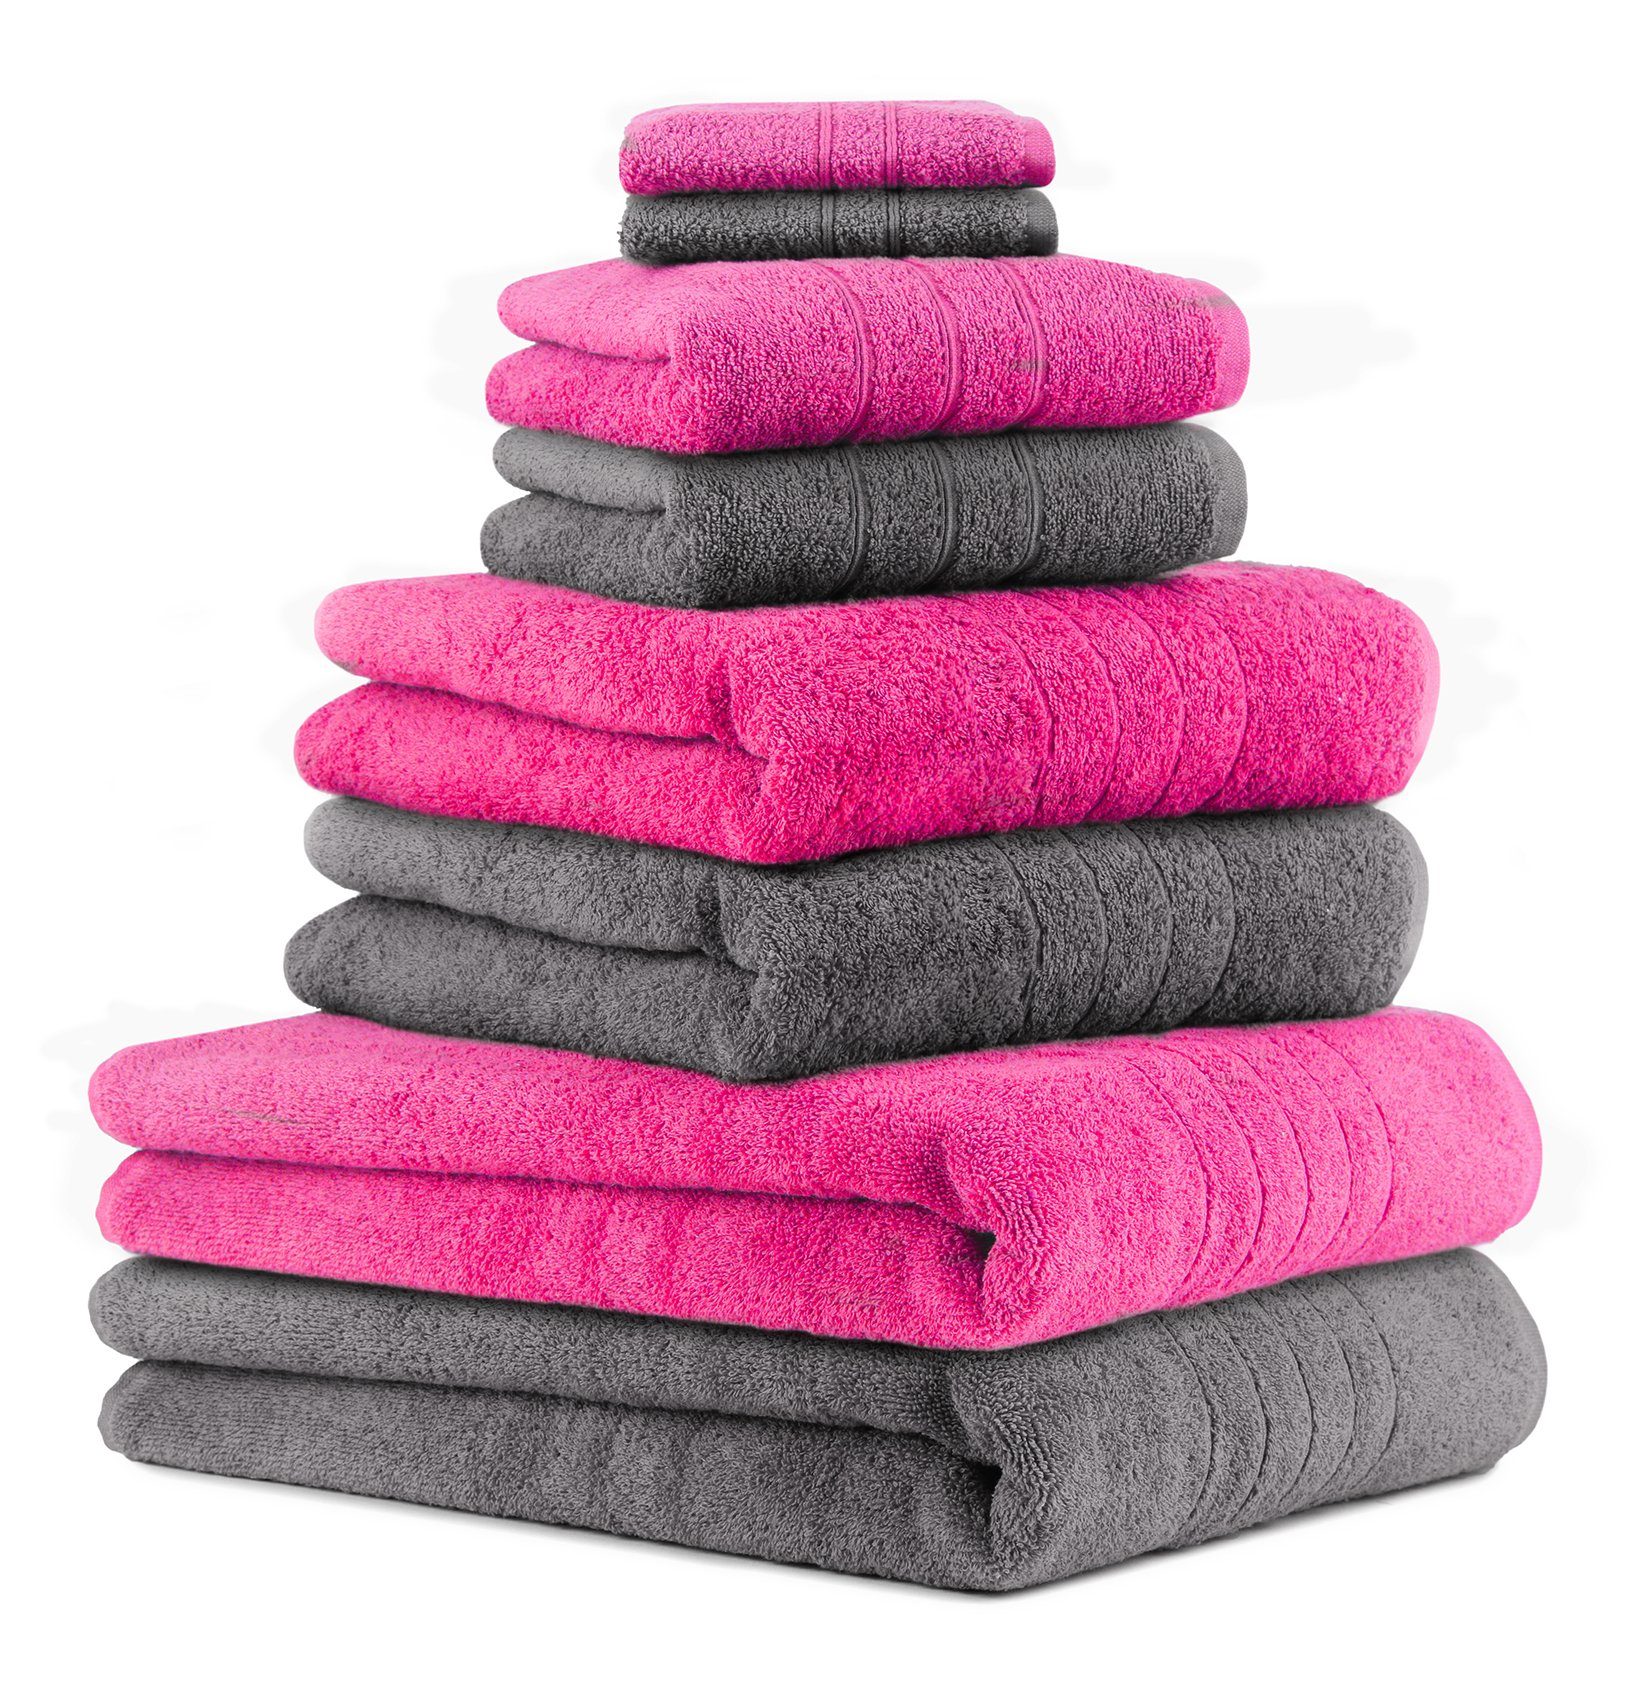 Betz Handtuch Set 8-TLG. Handtuch-Set Deluxe 100% Baumwolle 2 Badetücher 2 Duschtücher 2 Handtücher 2 Seiftücher Farbe anthrazit grau und Fuchsia, 100% Baumwolle, (8-tlg)